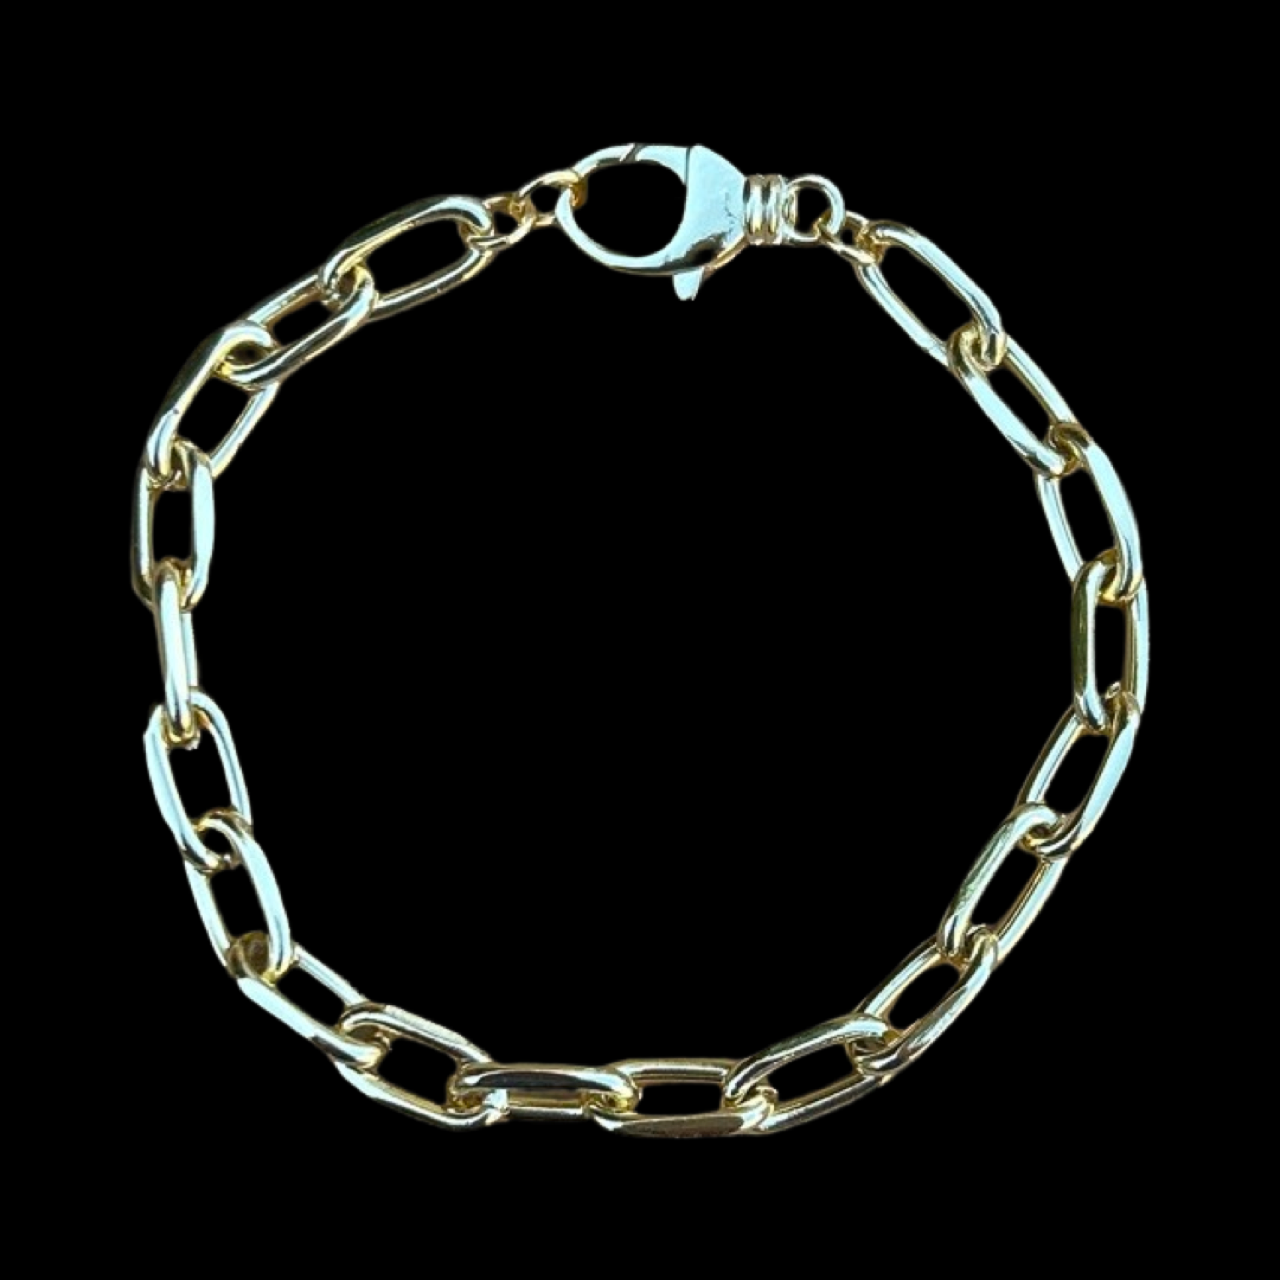 Bracelet - Chunky 14K gold filled bracelet with lobster claw clasp